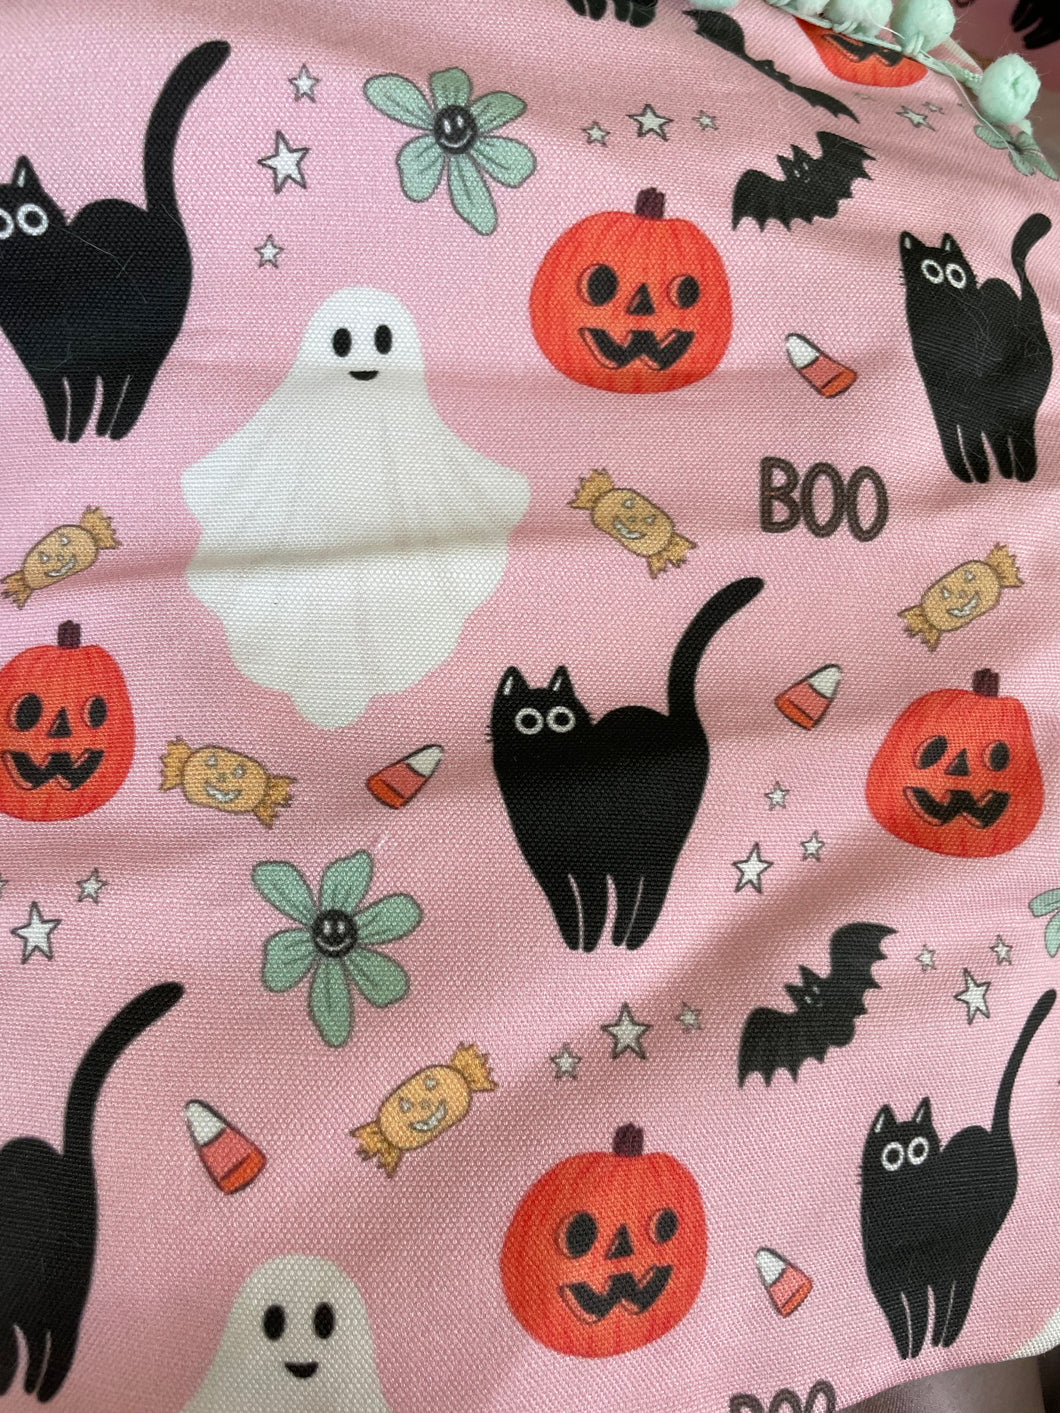 Black cat Halloween snuggle blanket